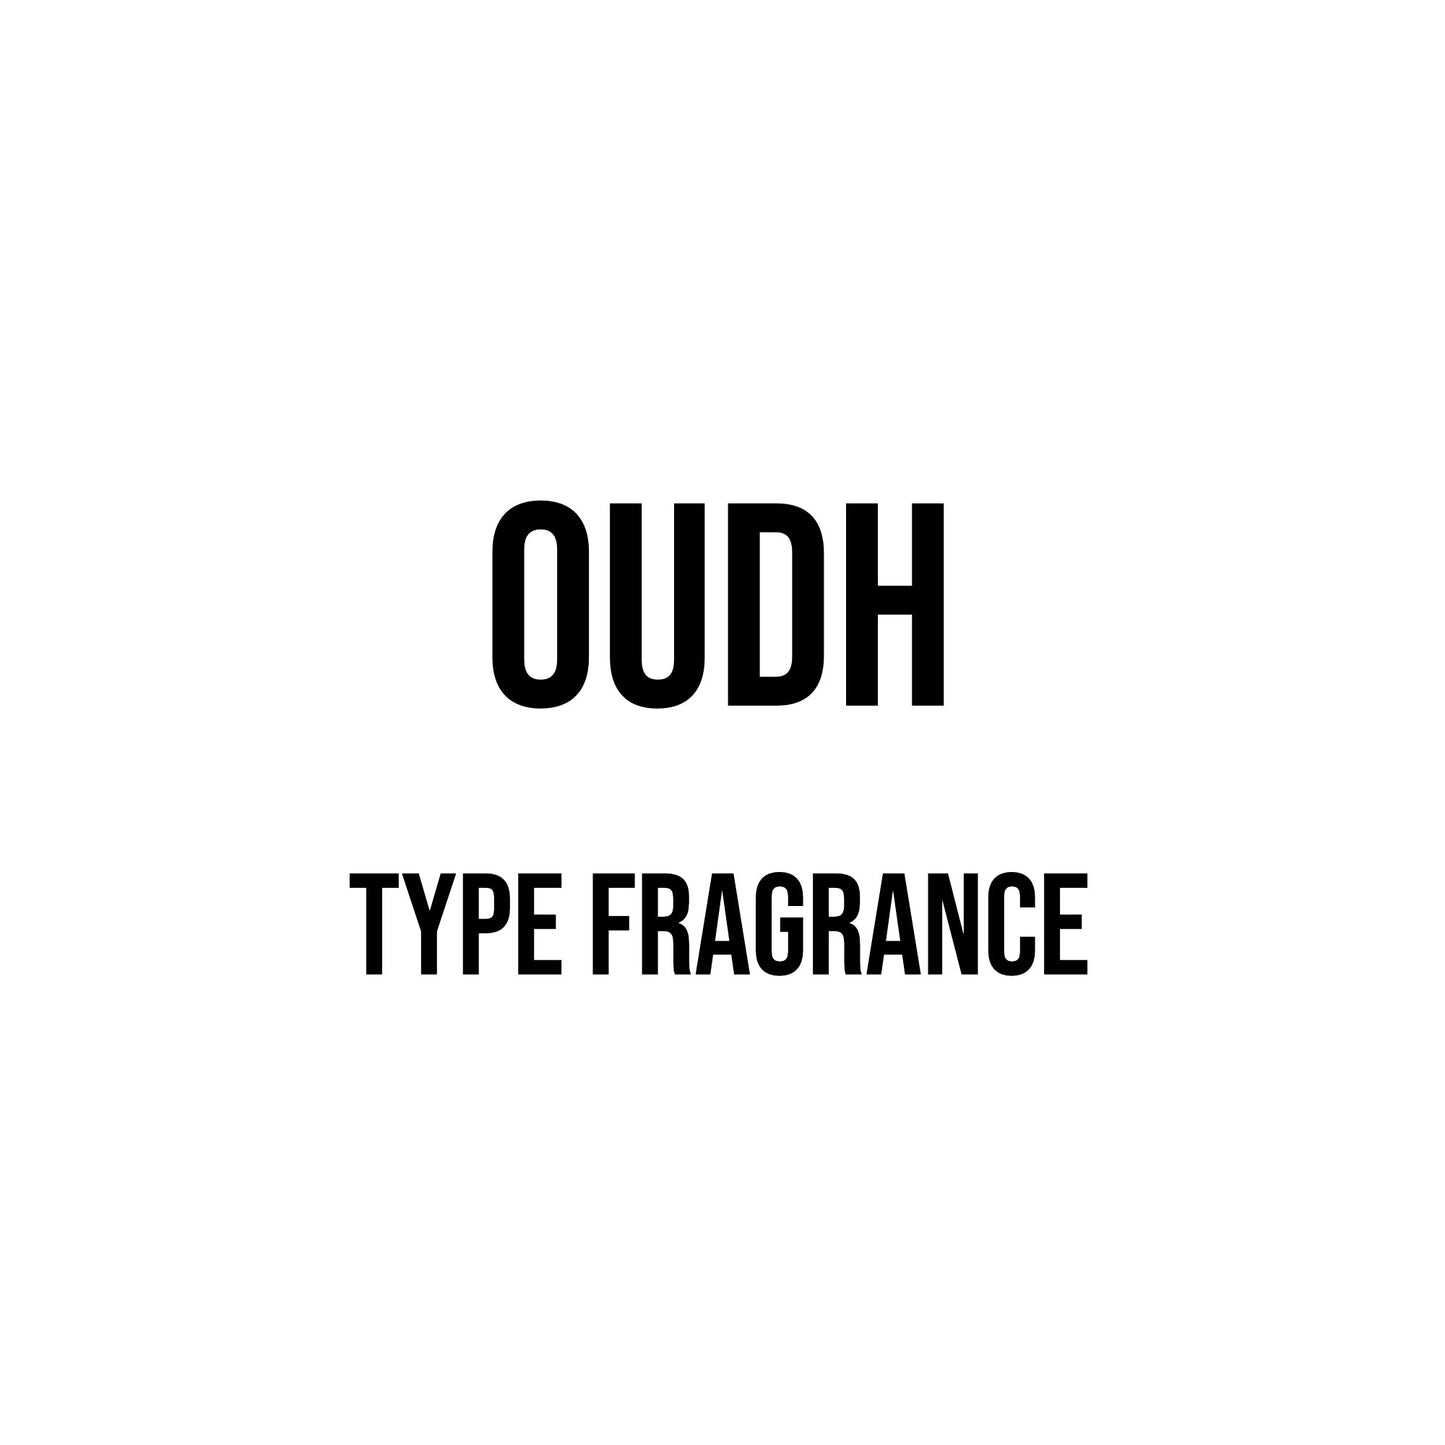 Oudh Type Fragrance